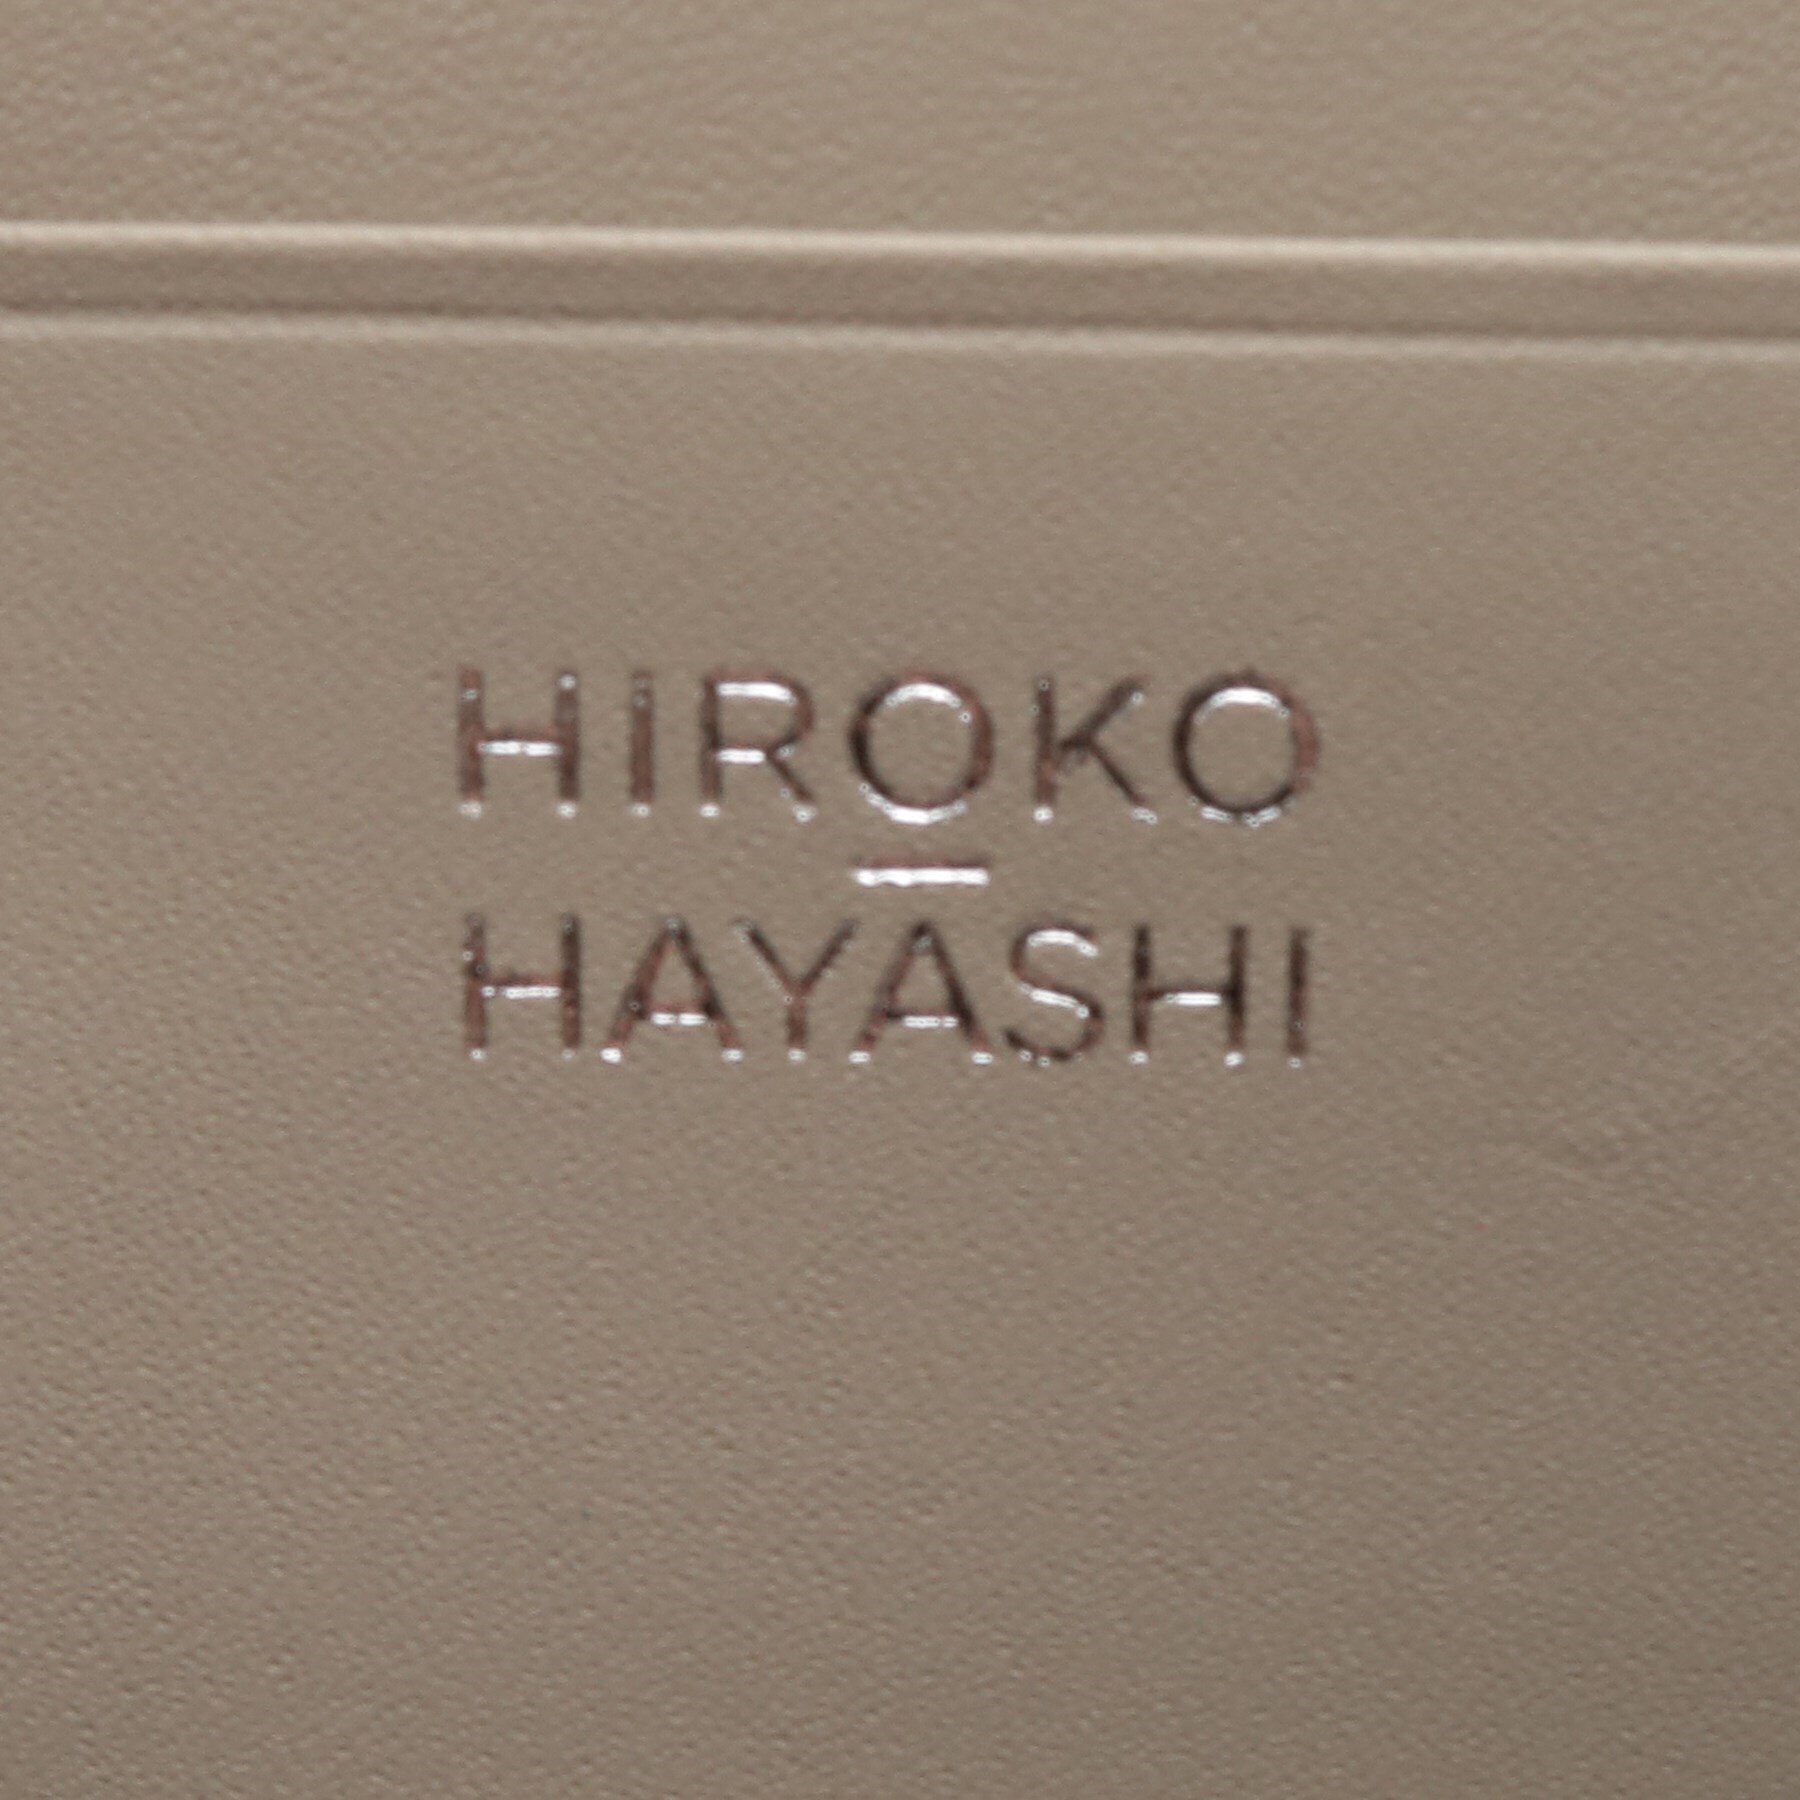 PLATINO(プラーティノ)マルチ財布|HIROKO HAYASHI(ヒロコ ハヤシ)の